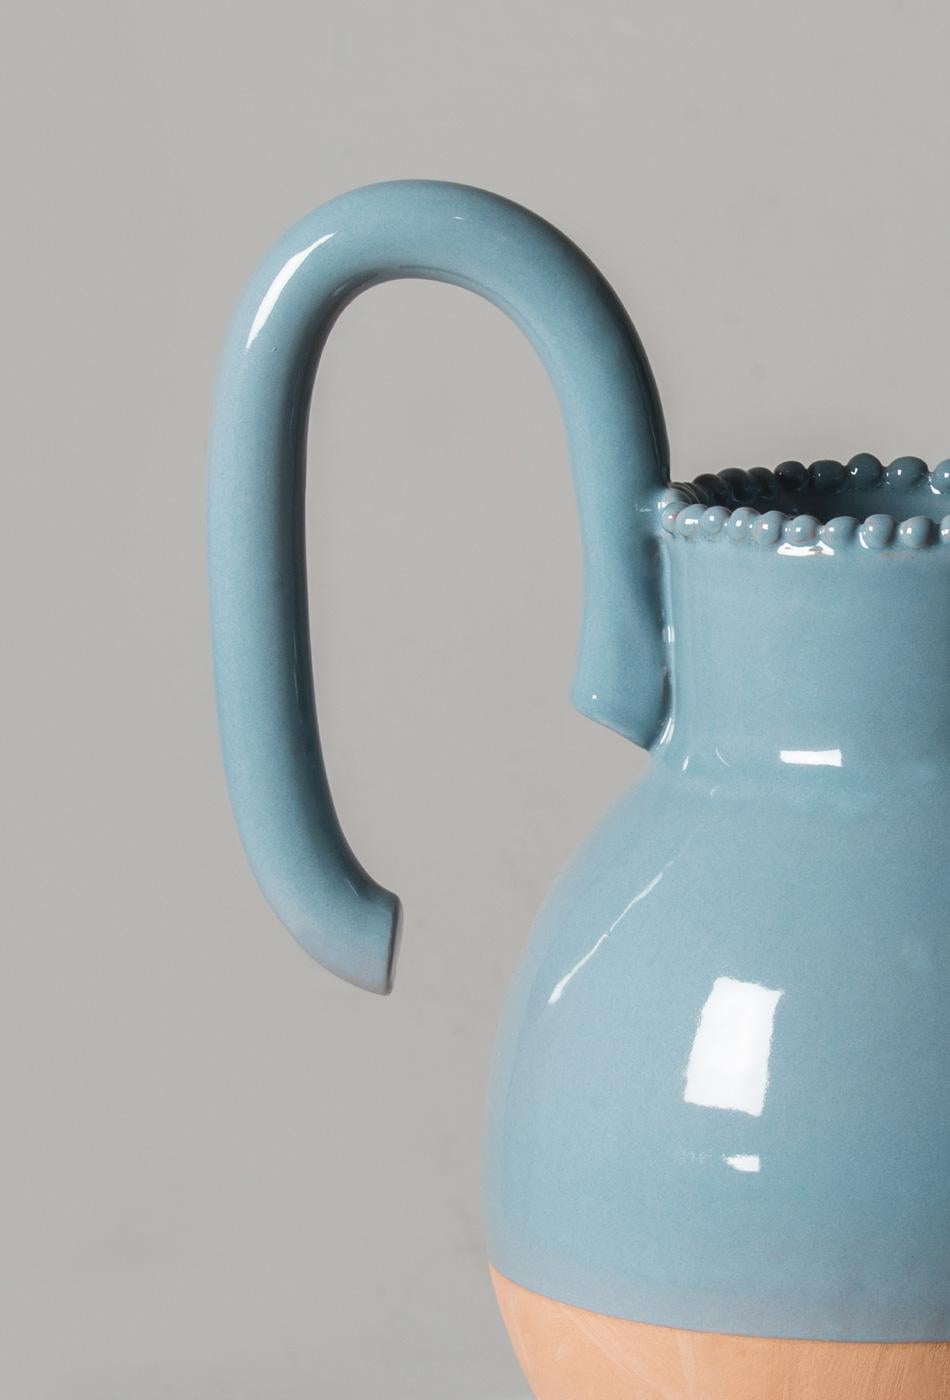 Glazed Langiu Vase, a Revisitation of the Sardinian Water Jug by Sam Baron For Sale